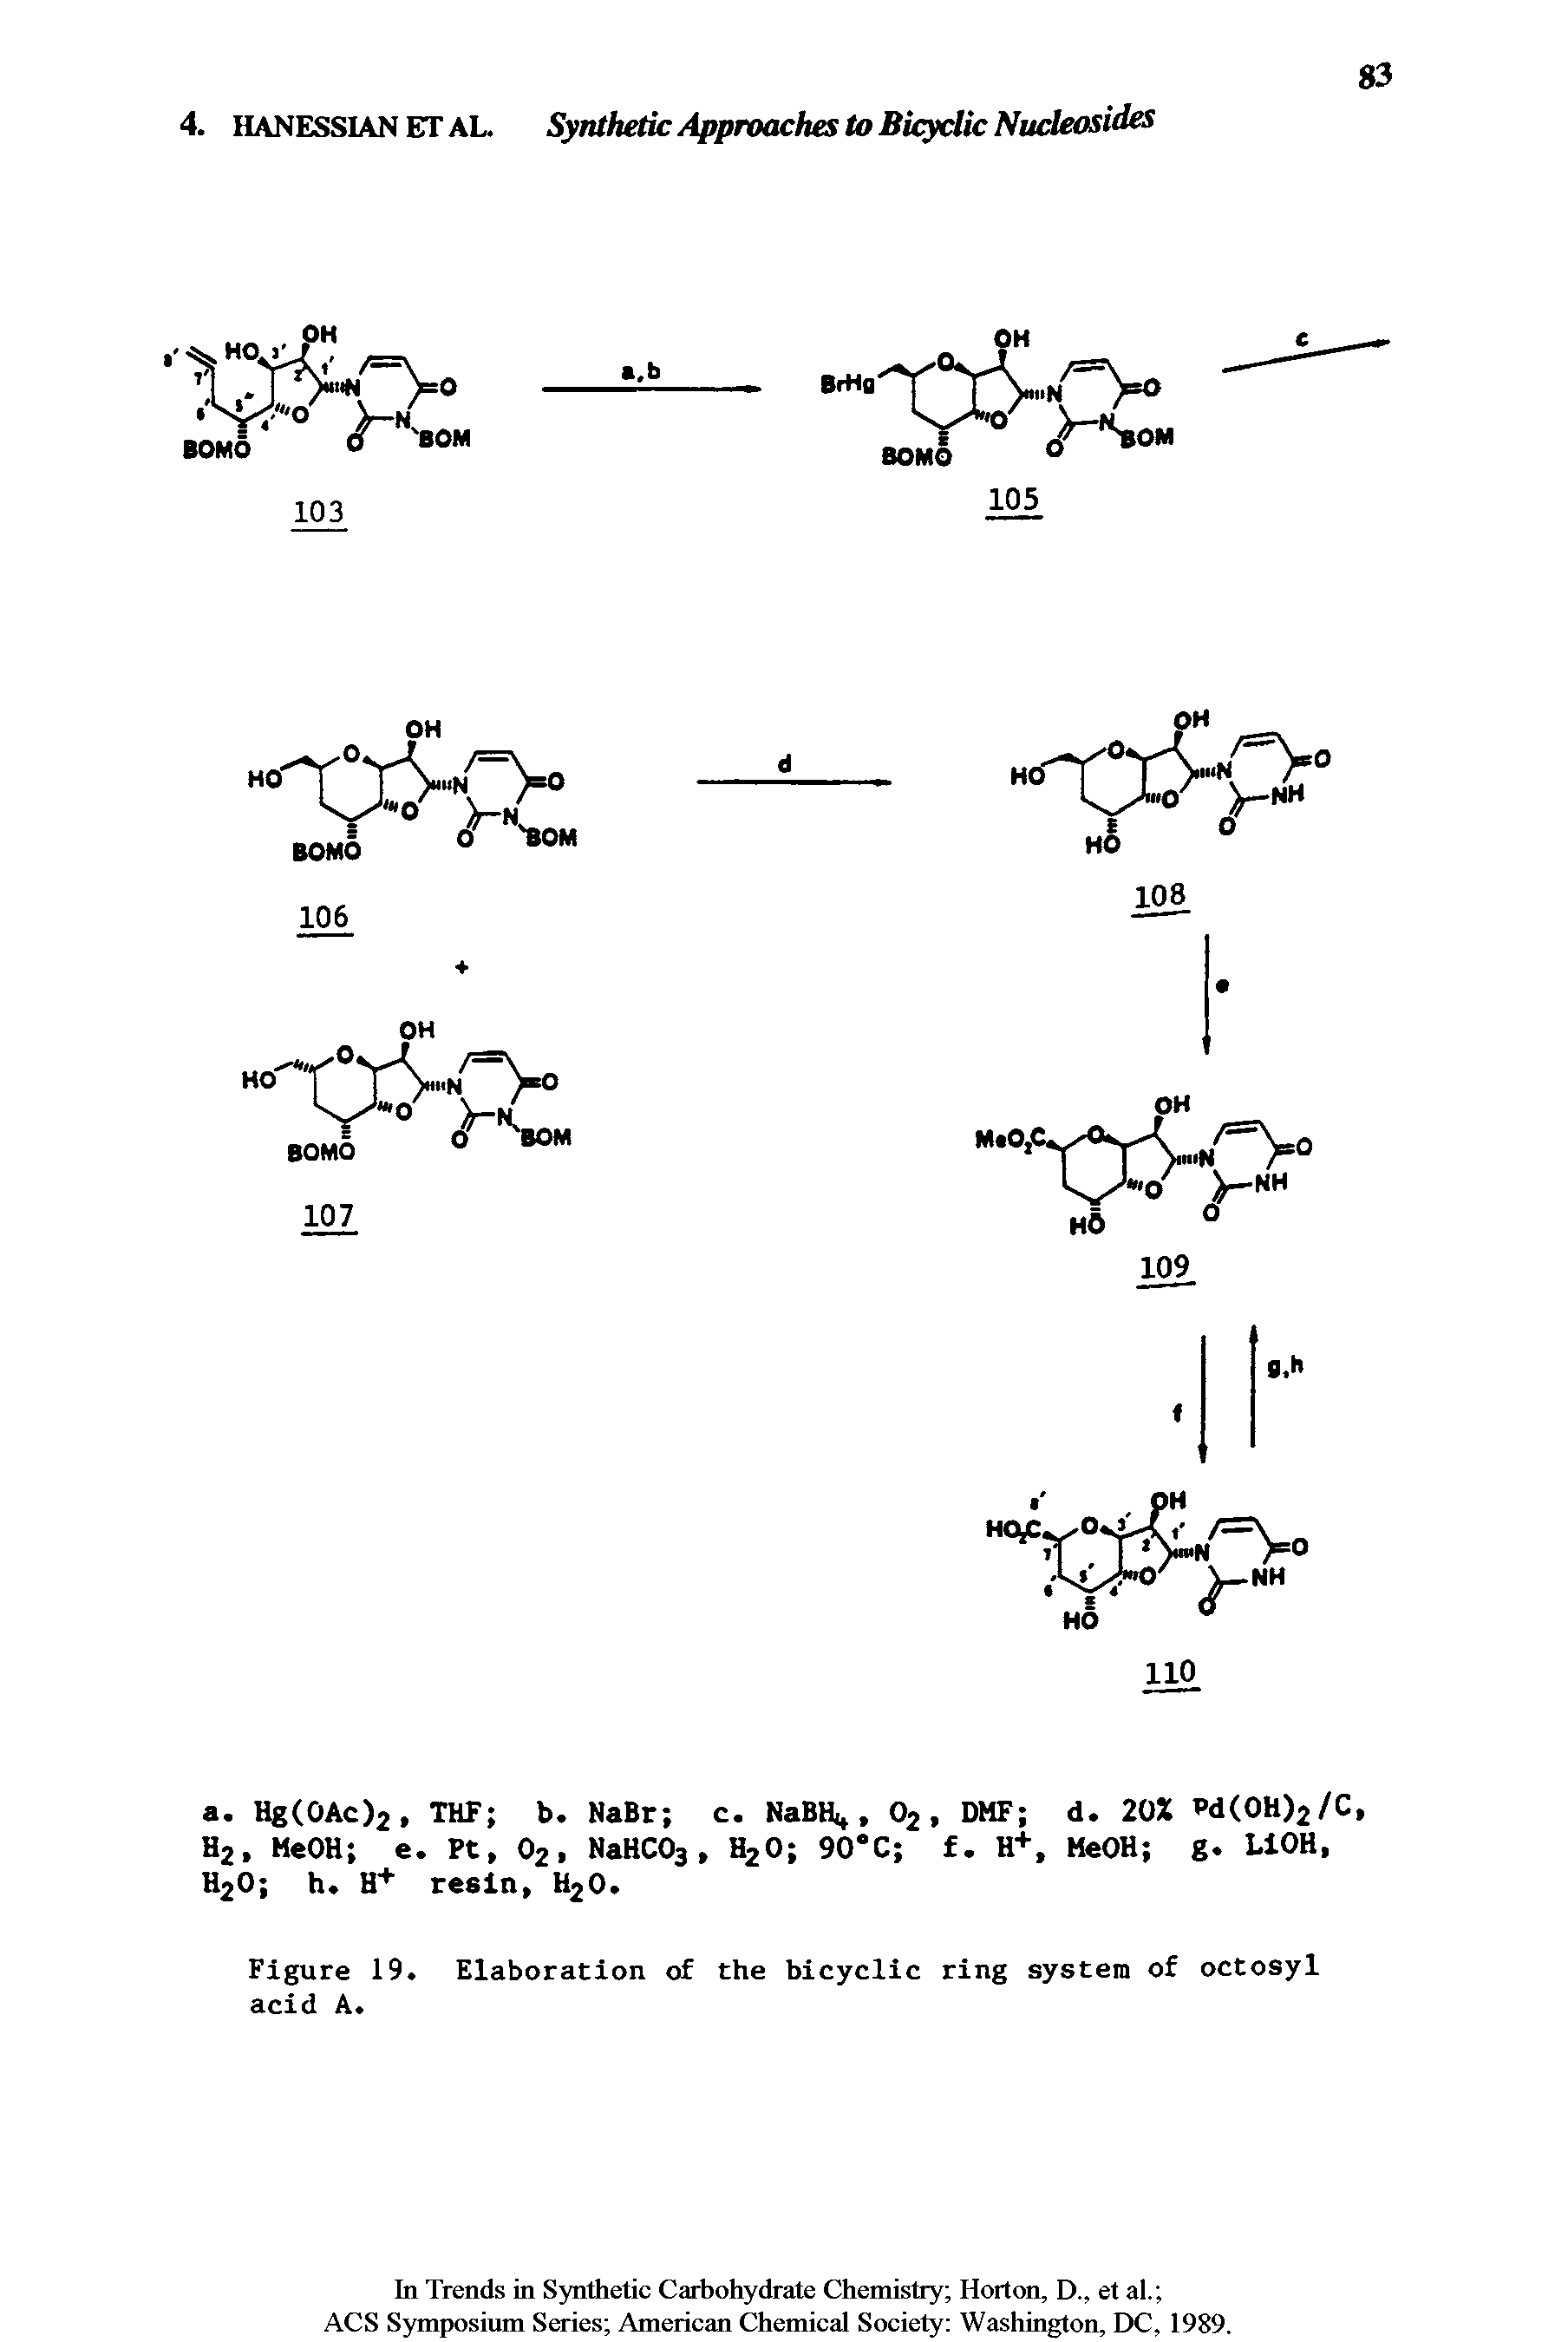 Figure 19. Elaboration of the bicydic ring system of octosyl acid Ae...